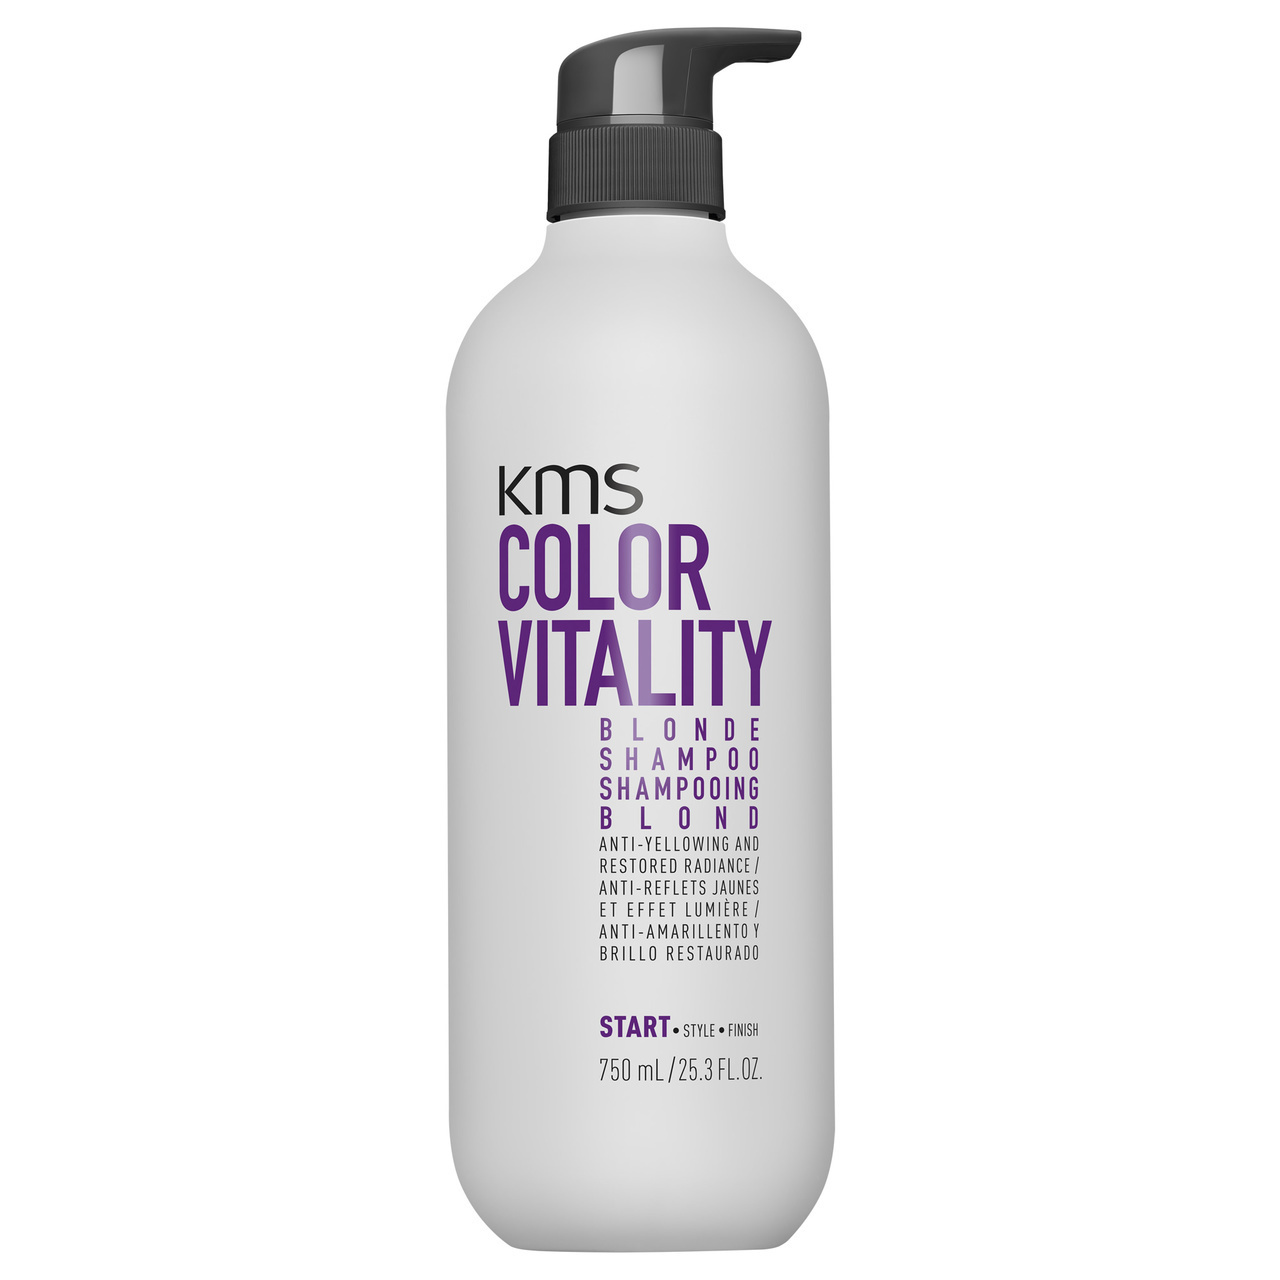 KMS COLORVITALITY Blonde Shampoo 25.3oz - $60.38